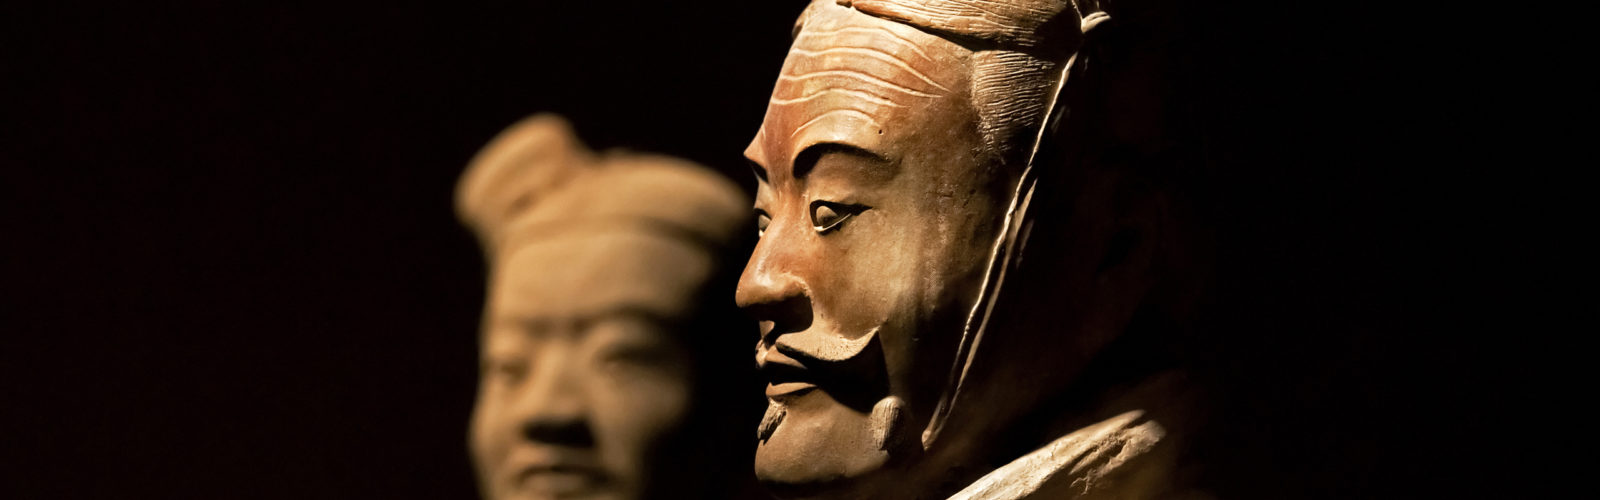 statue-qin-dynasty-china